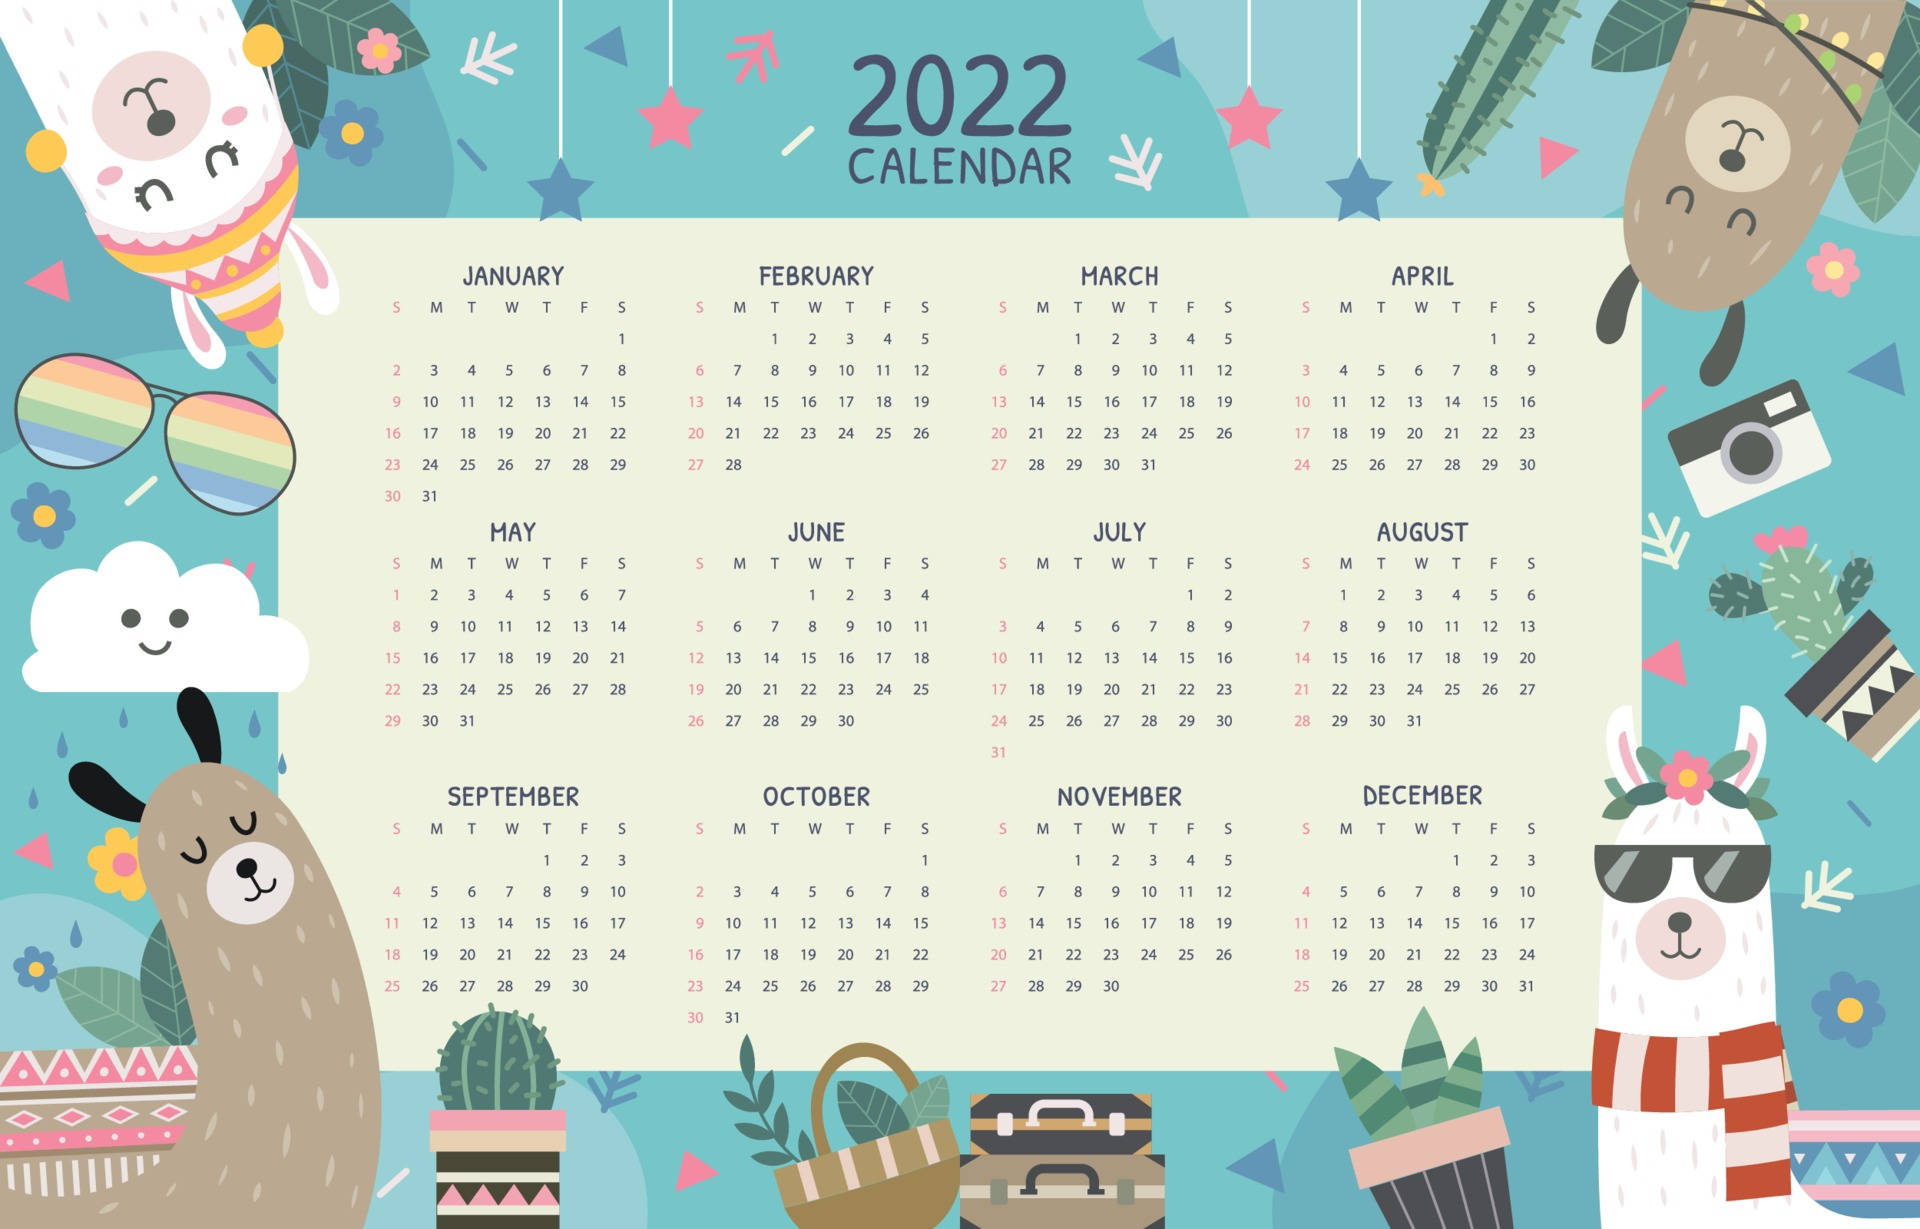 2022 Calendar Doodle Picture